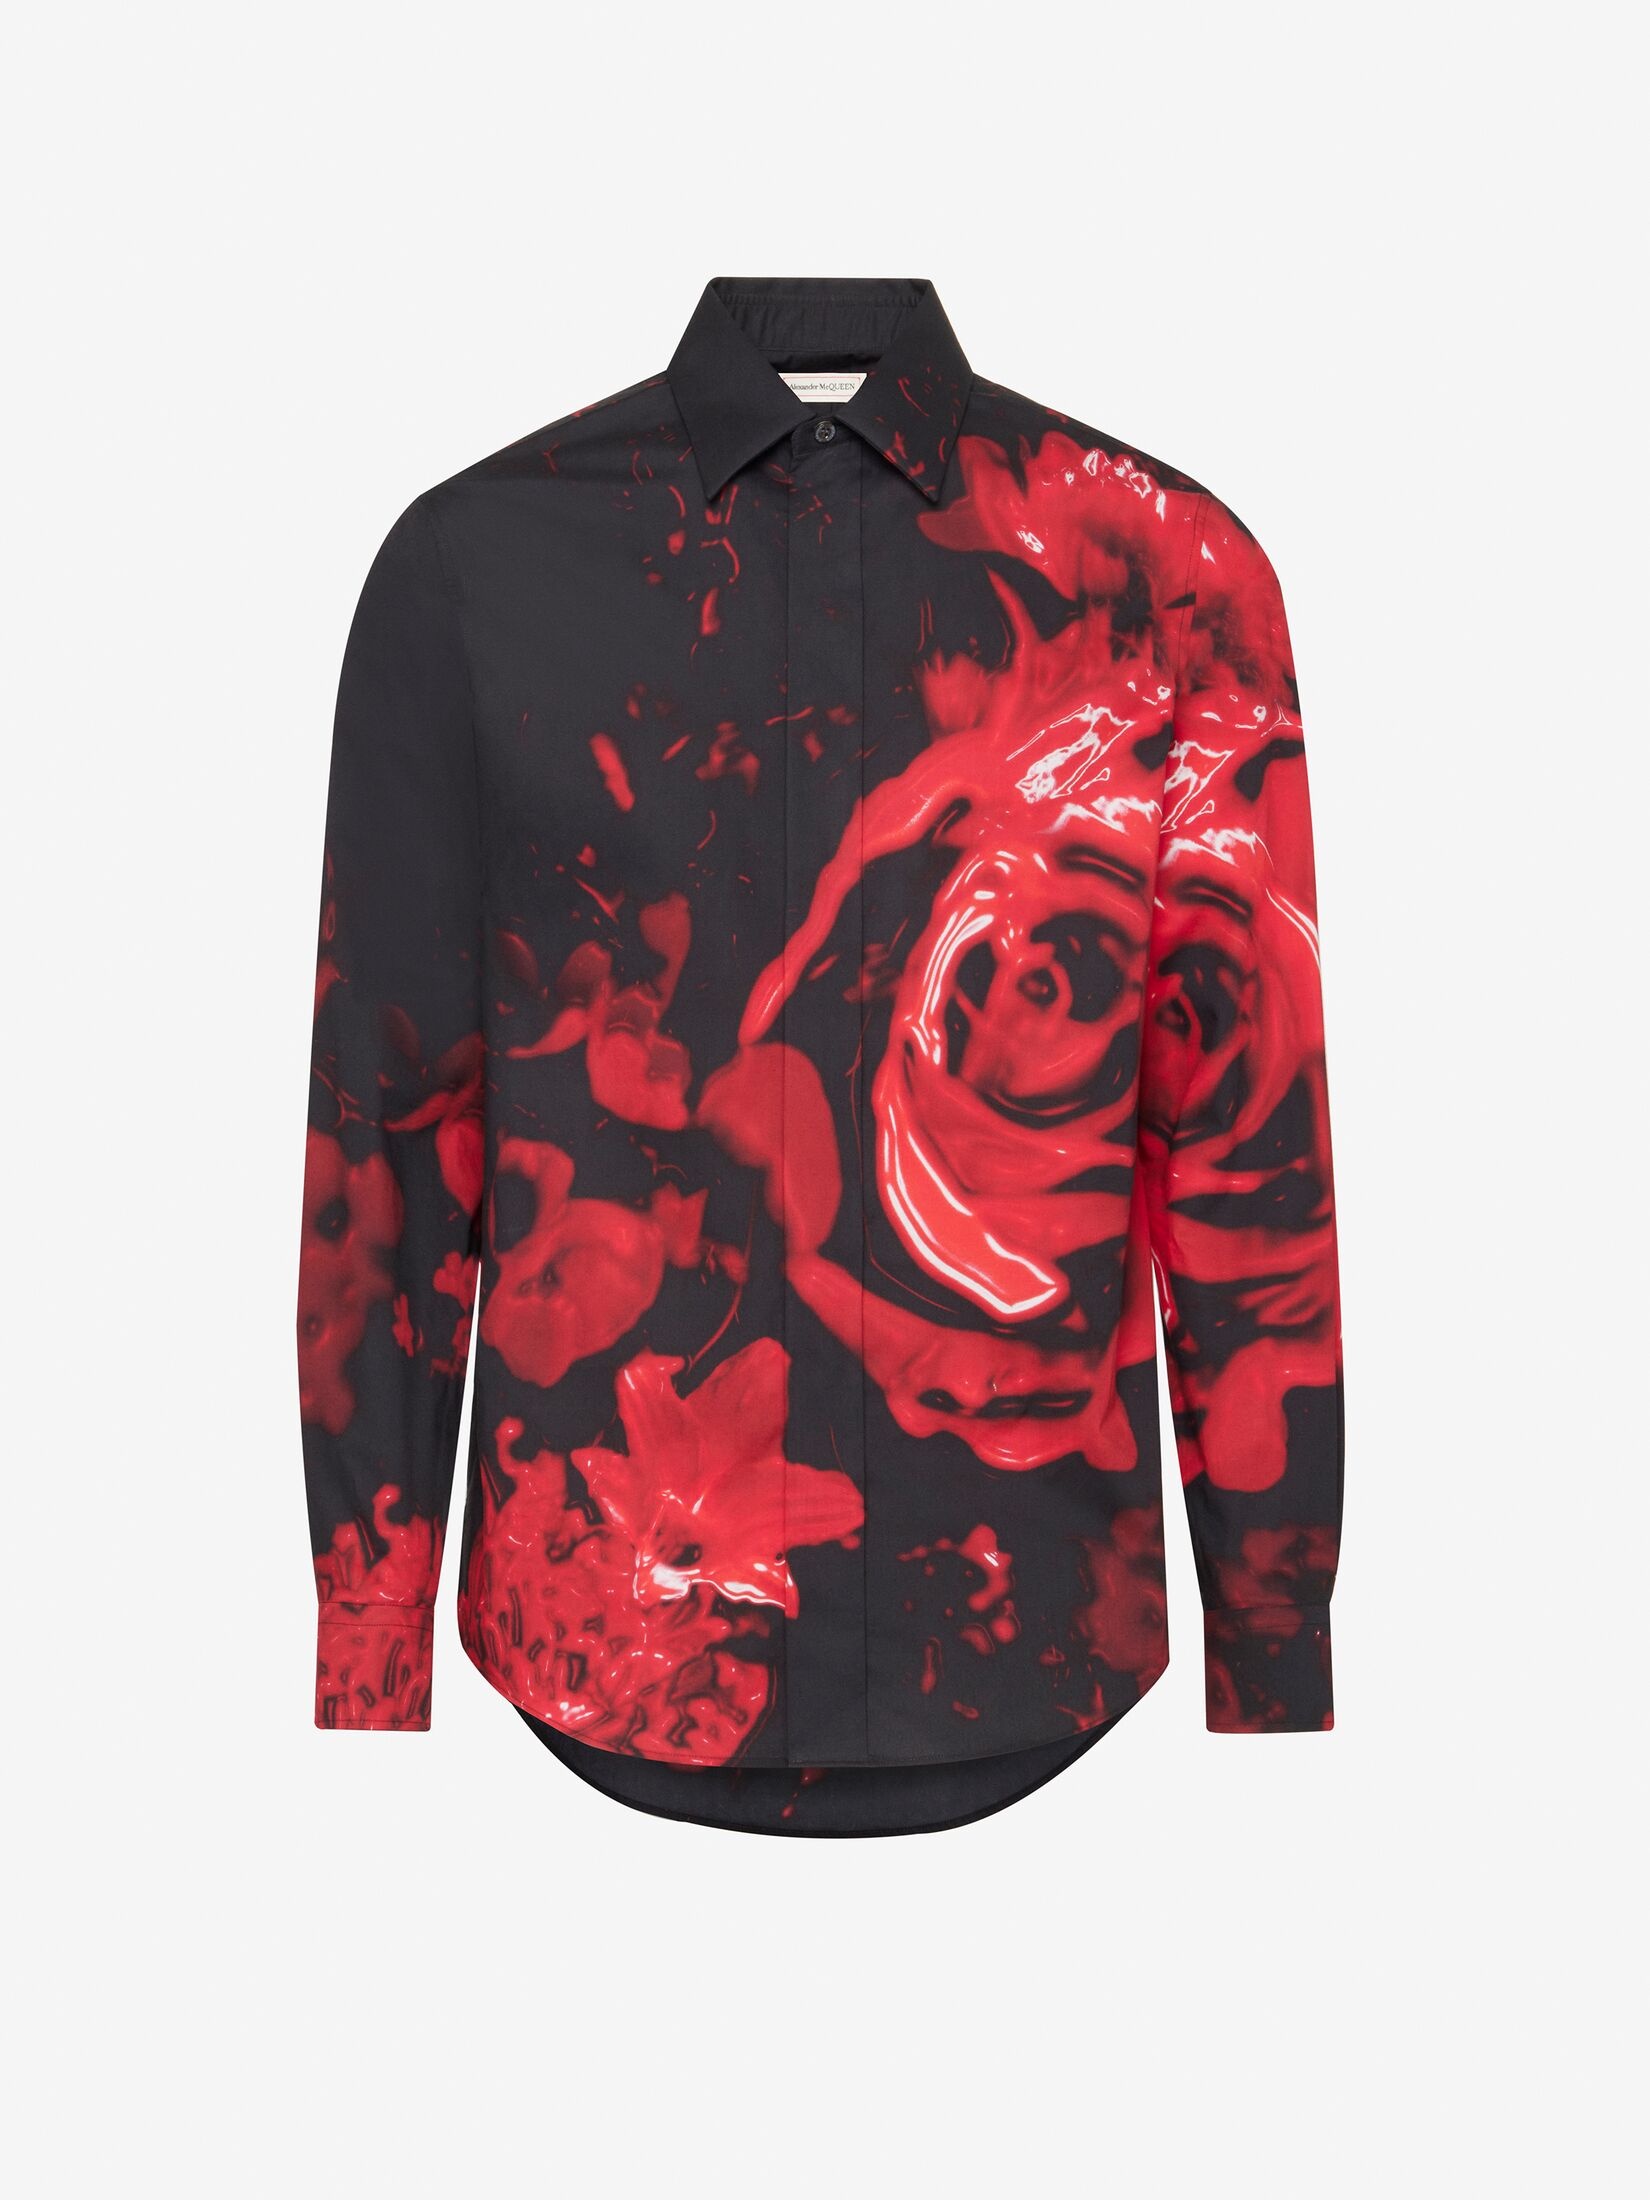 Men's Wax Flower Shirt in Black/red - 1